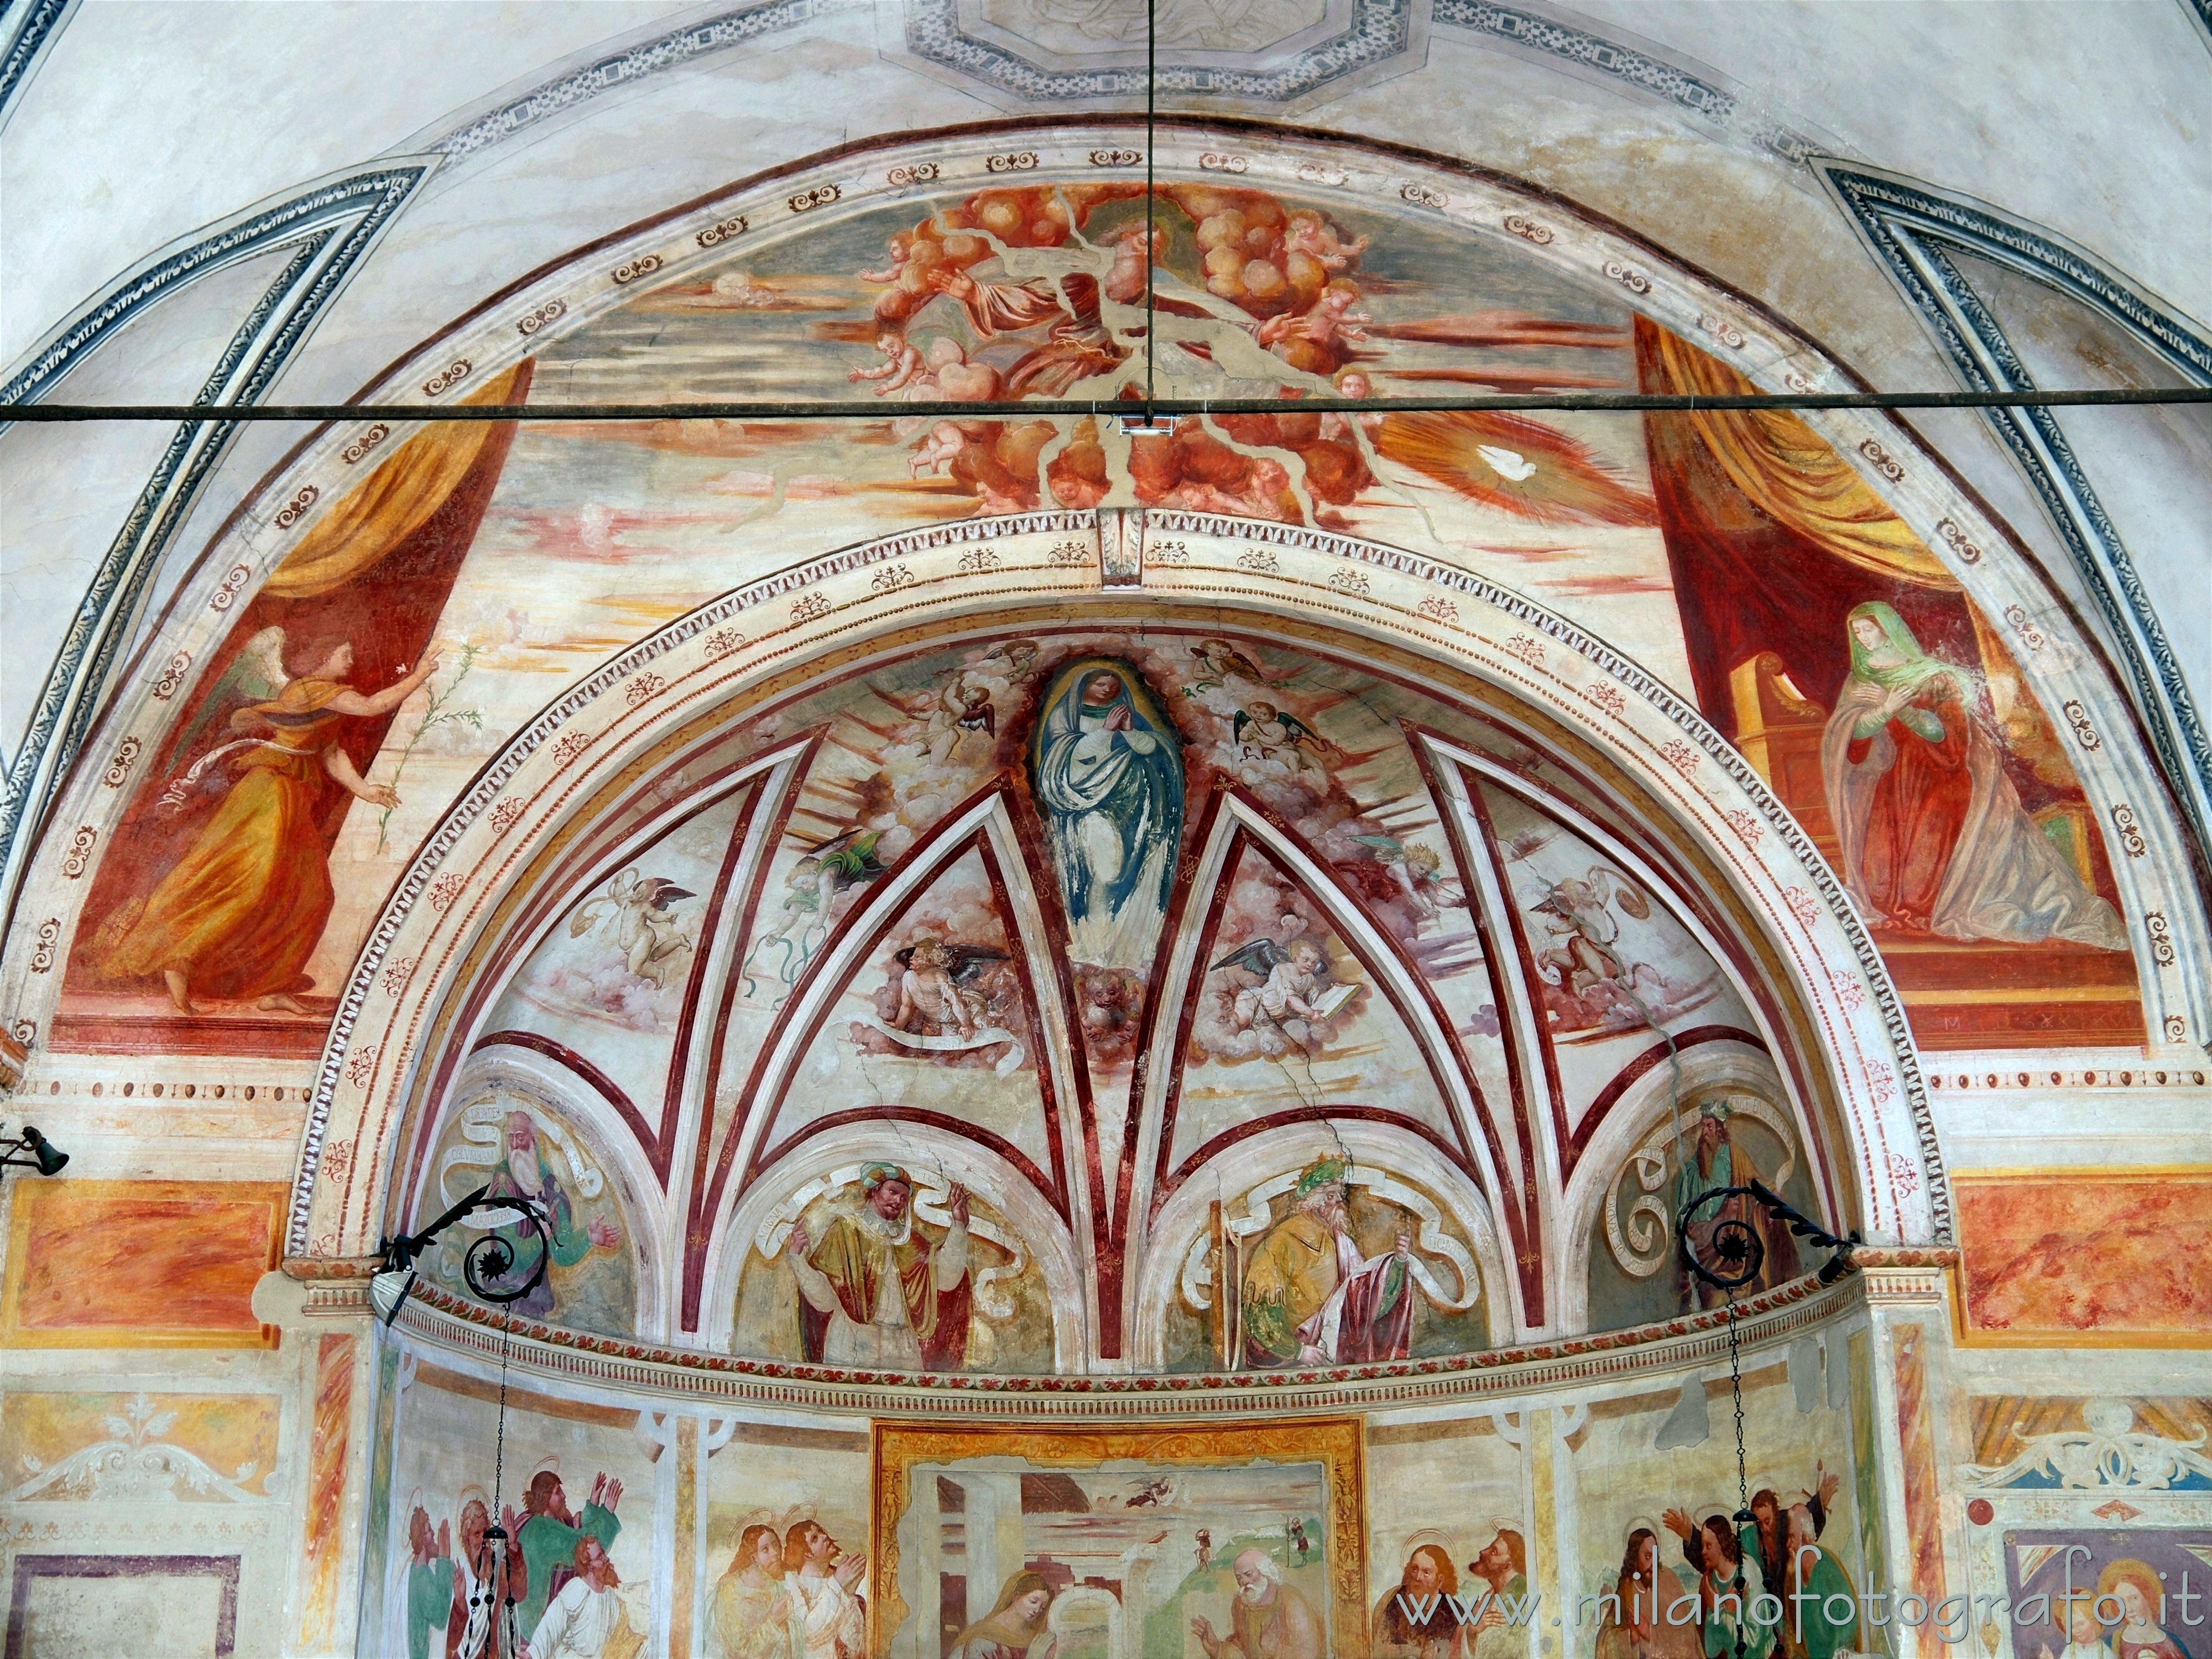 Vimodrone (Milan, Italy): Fresco of the Annunciation in the Church of Santa Maria Nova al Pilastrello - Vimodrone (Milan, Italy)